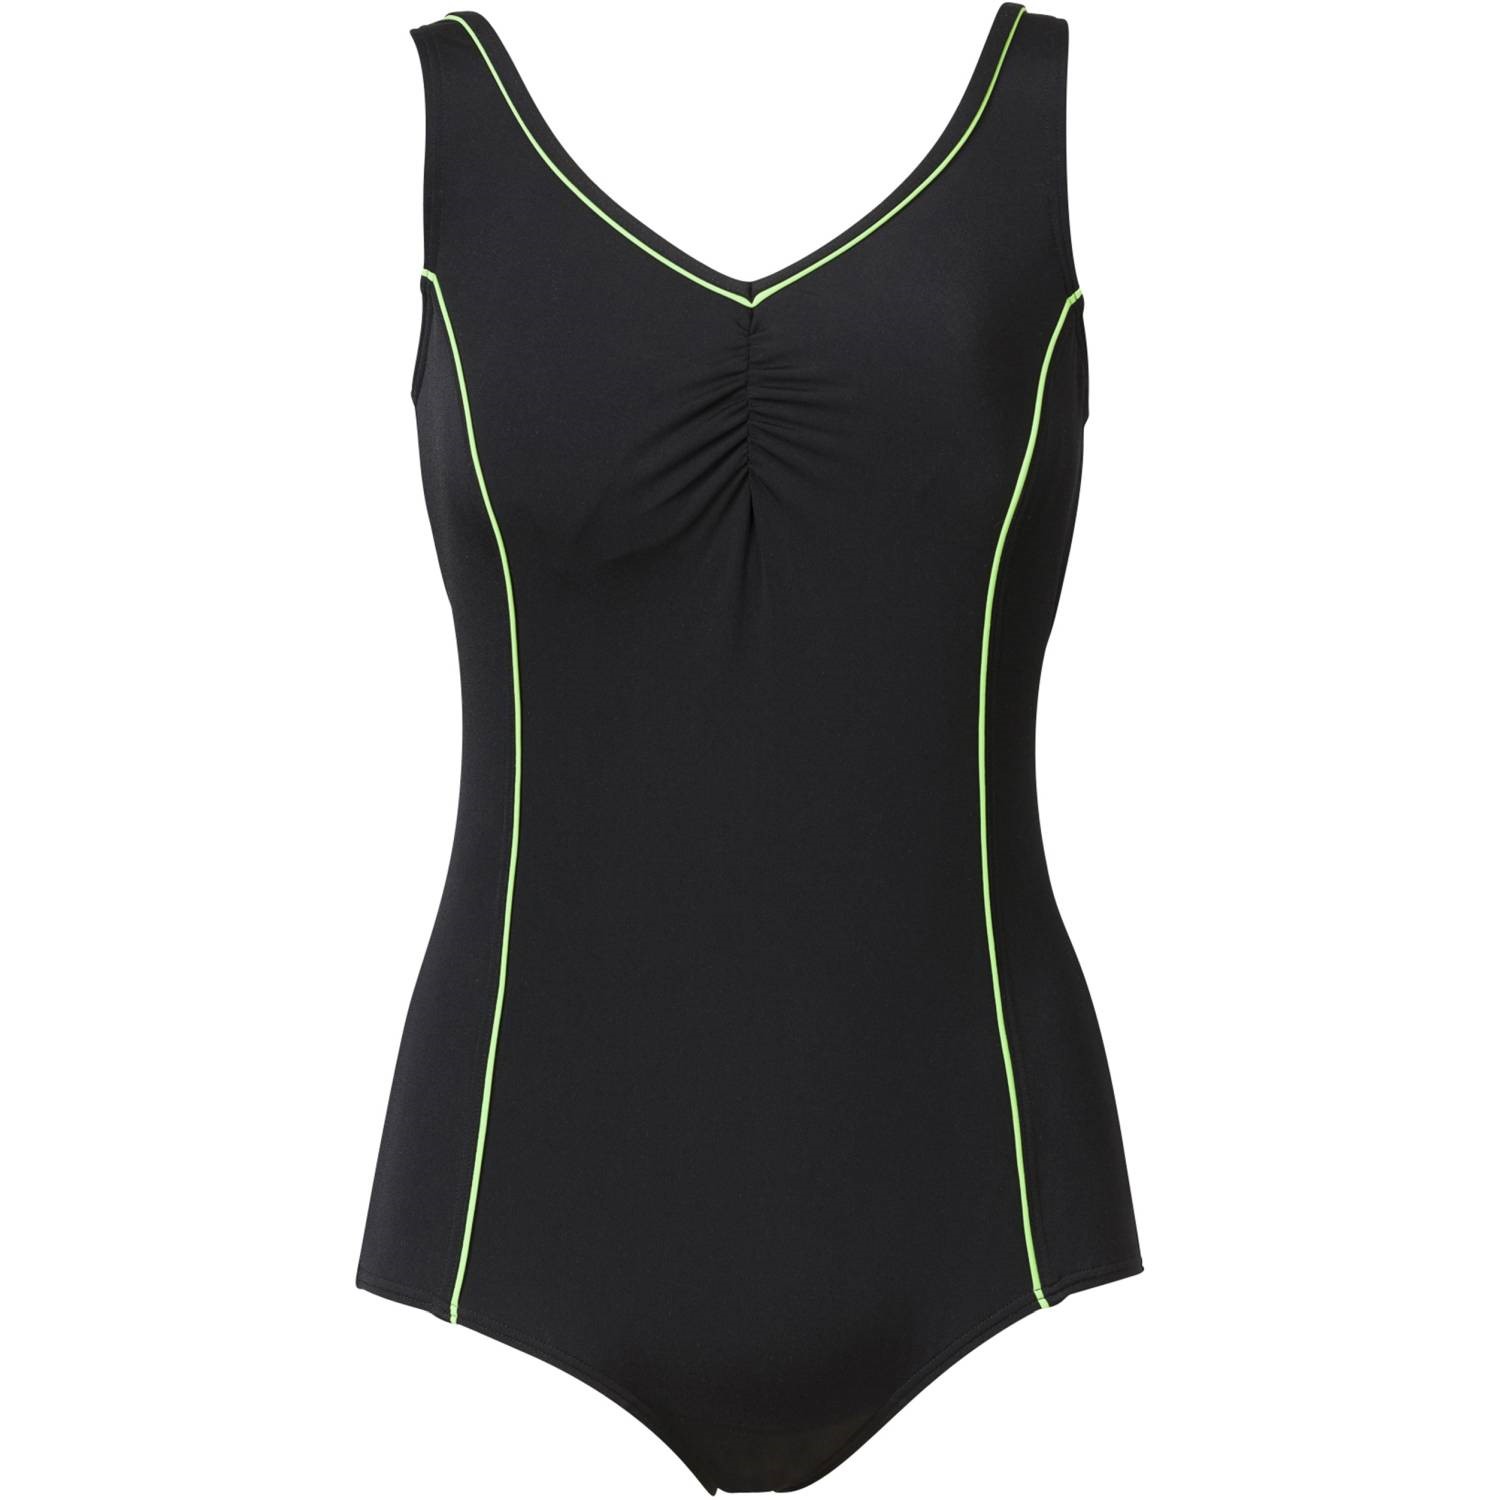 Trofe Swimsuit With Adjustable Shoulder Straps